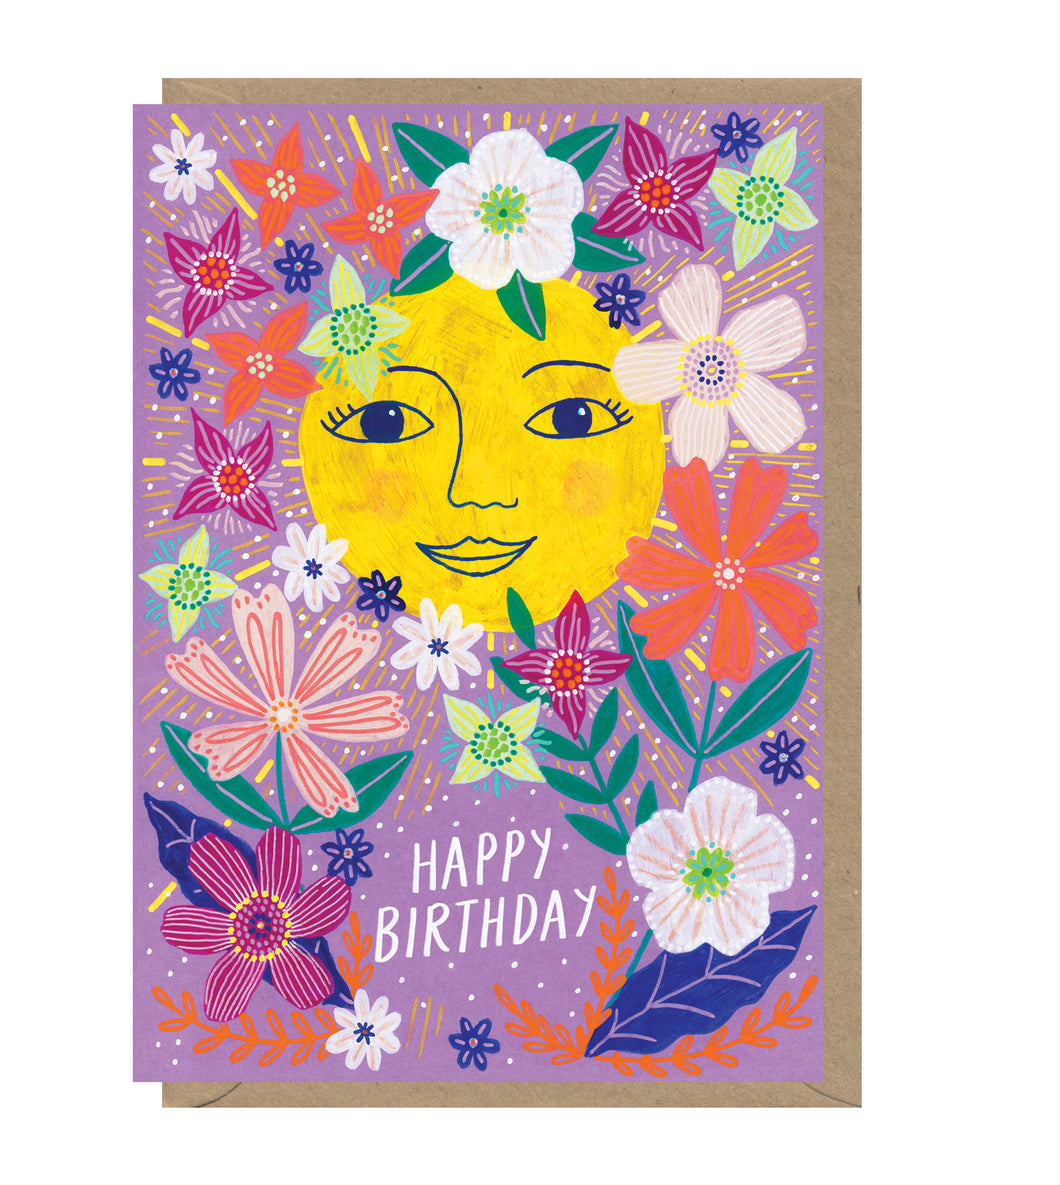 HAPPY BIRTHDAY - GREETINGS CARD WITH BONBI FOREST ARTWORK